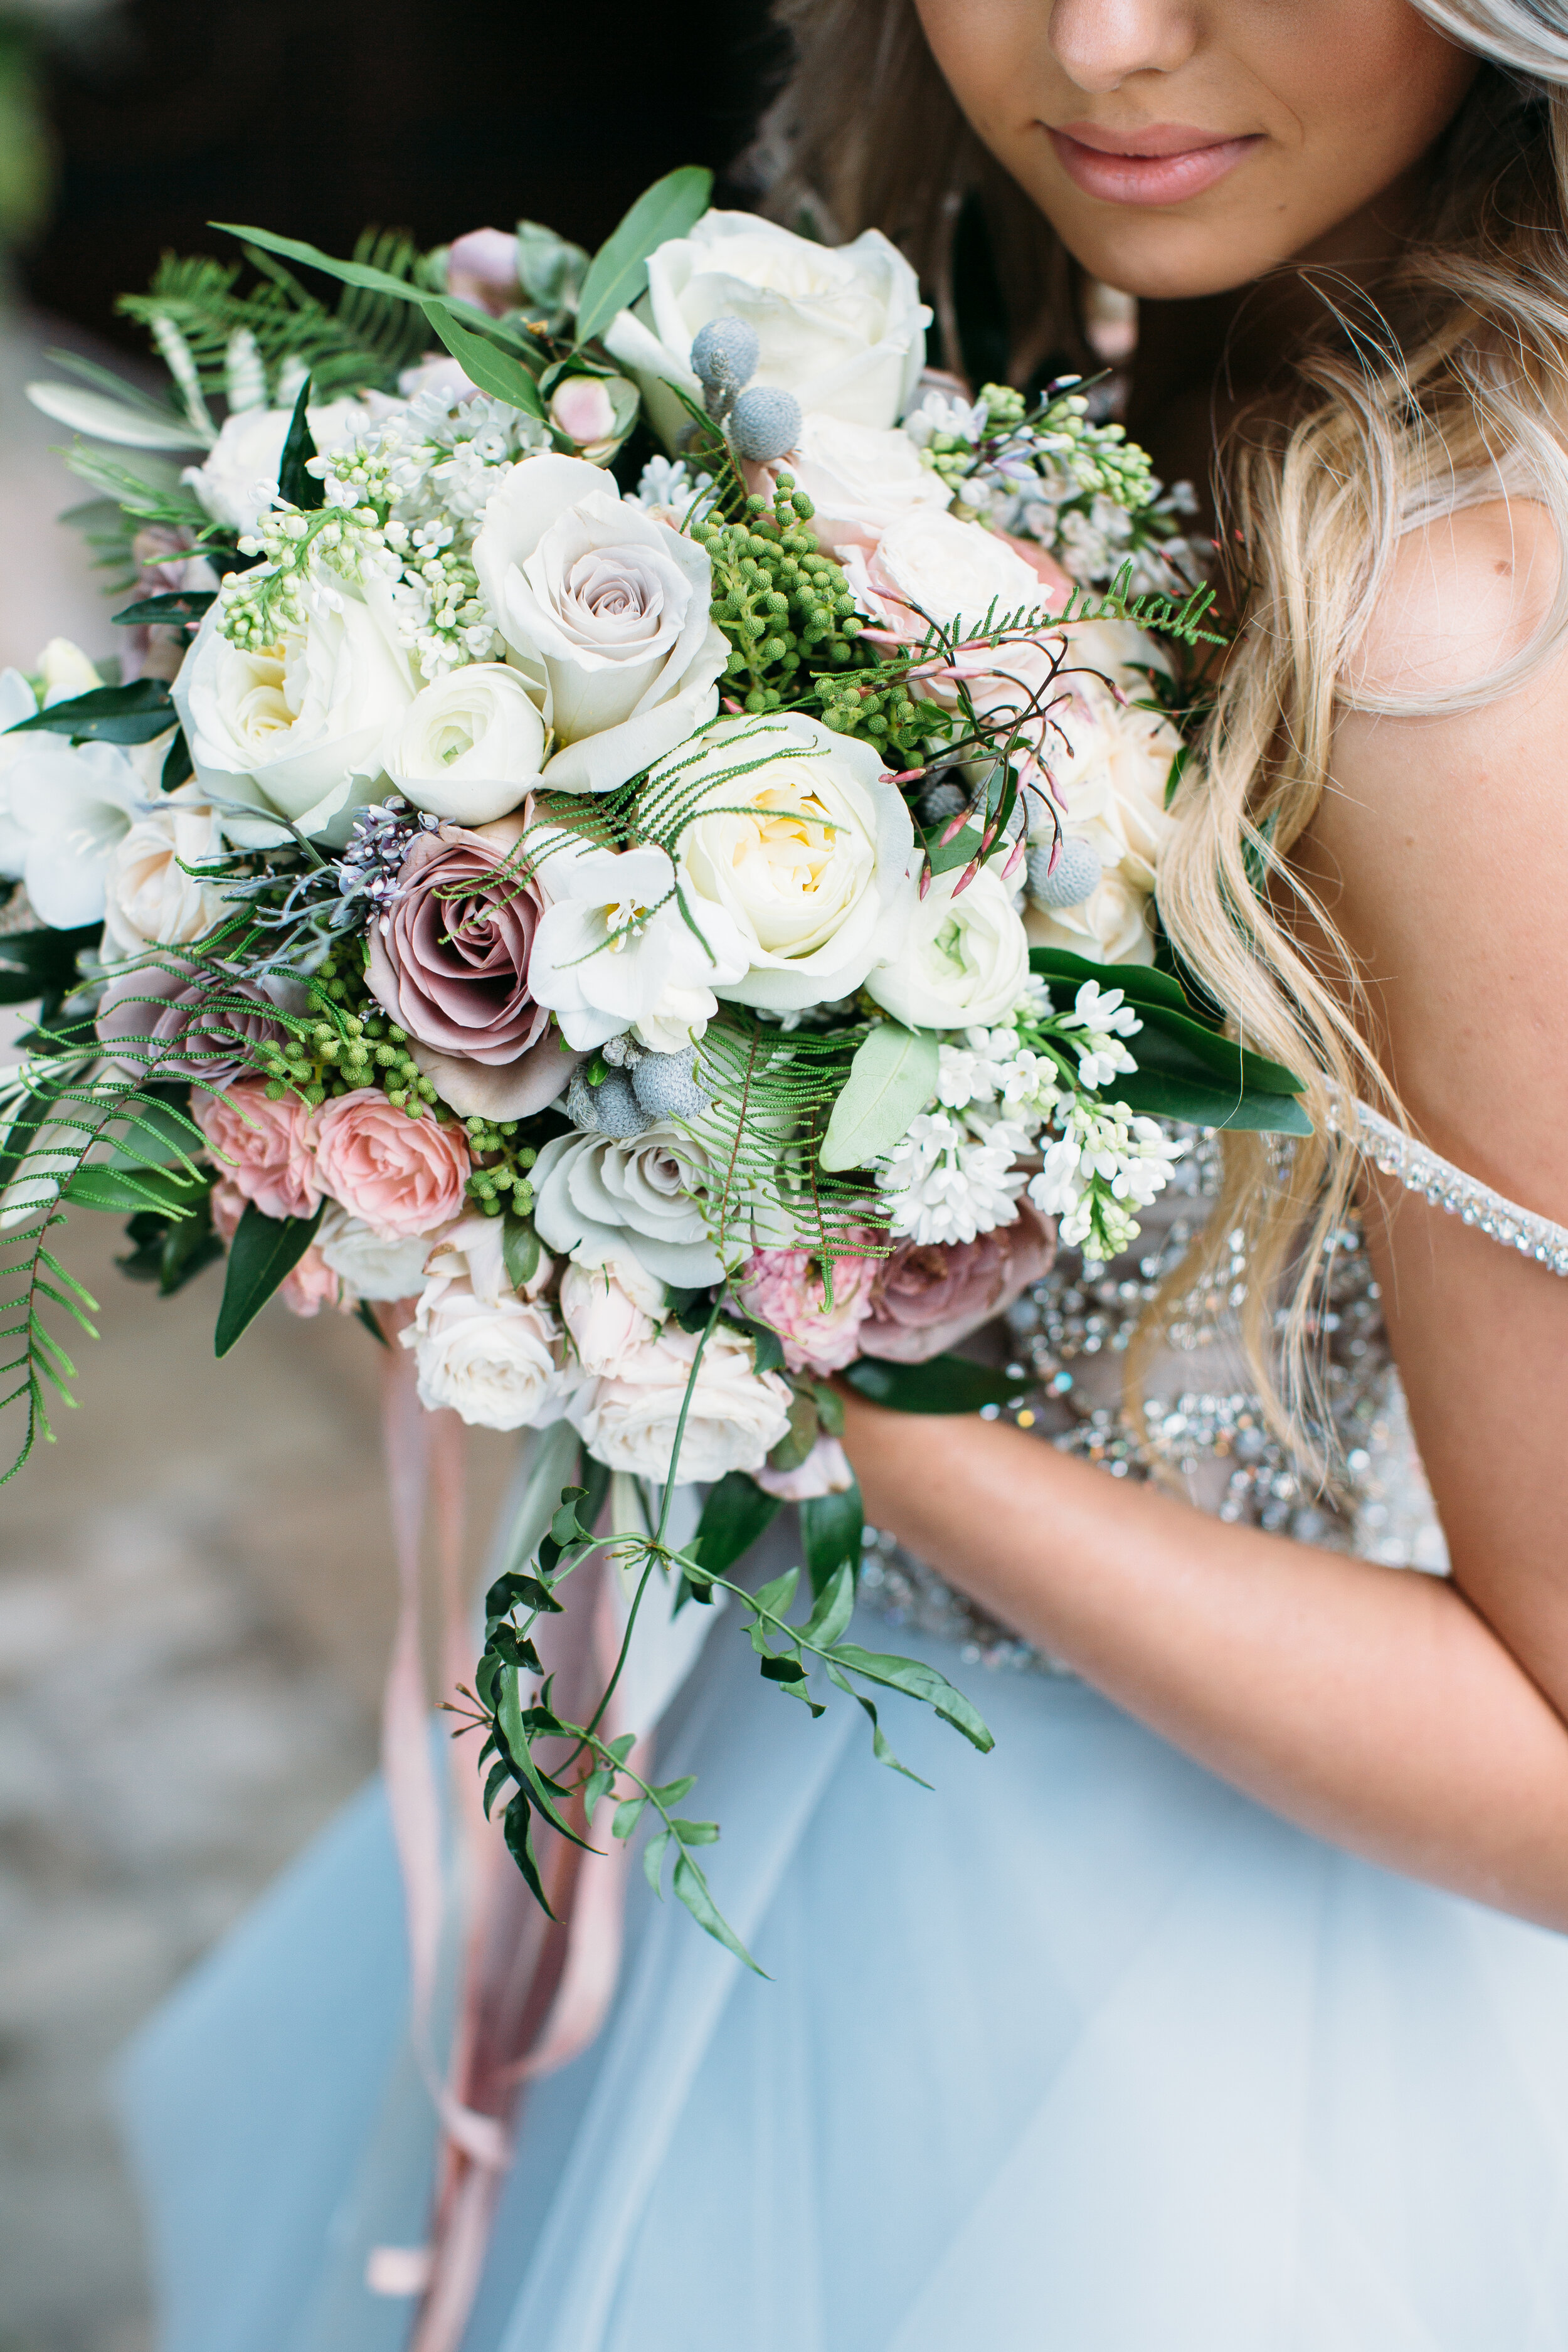 luxury-wedding-bridal-bouquet-details-garden-rose-lilac-lavender-greenery-bridal-bouquet-blushes-whites-upscale-inspiration-northern-california-sonoma-v-sattui-florist-design-violette-fleurs-anna-perevertaylo.jpg